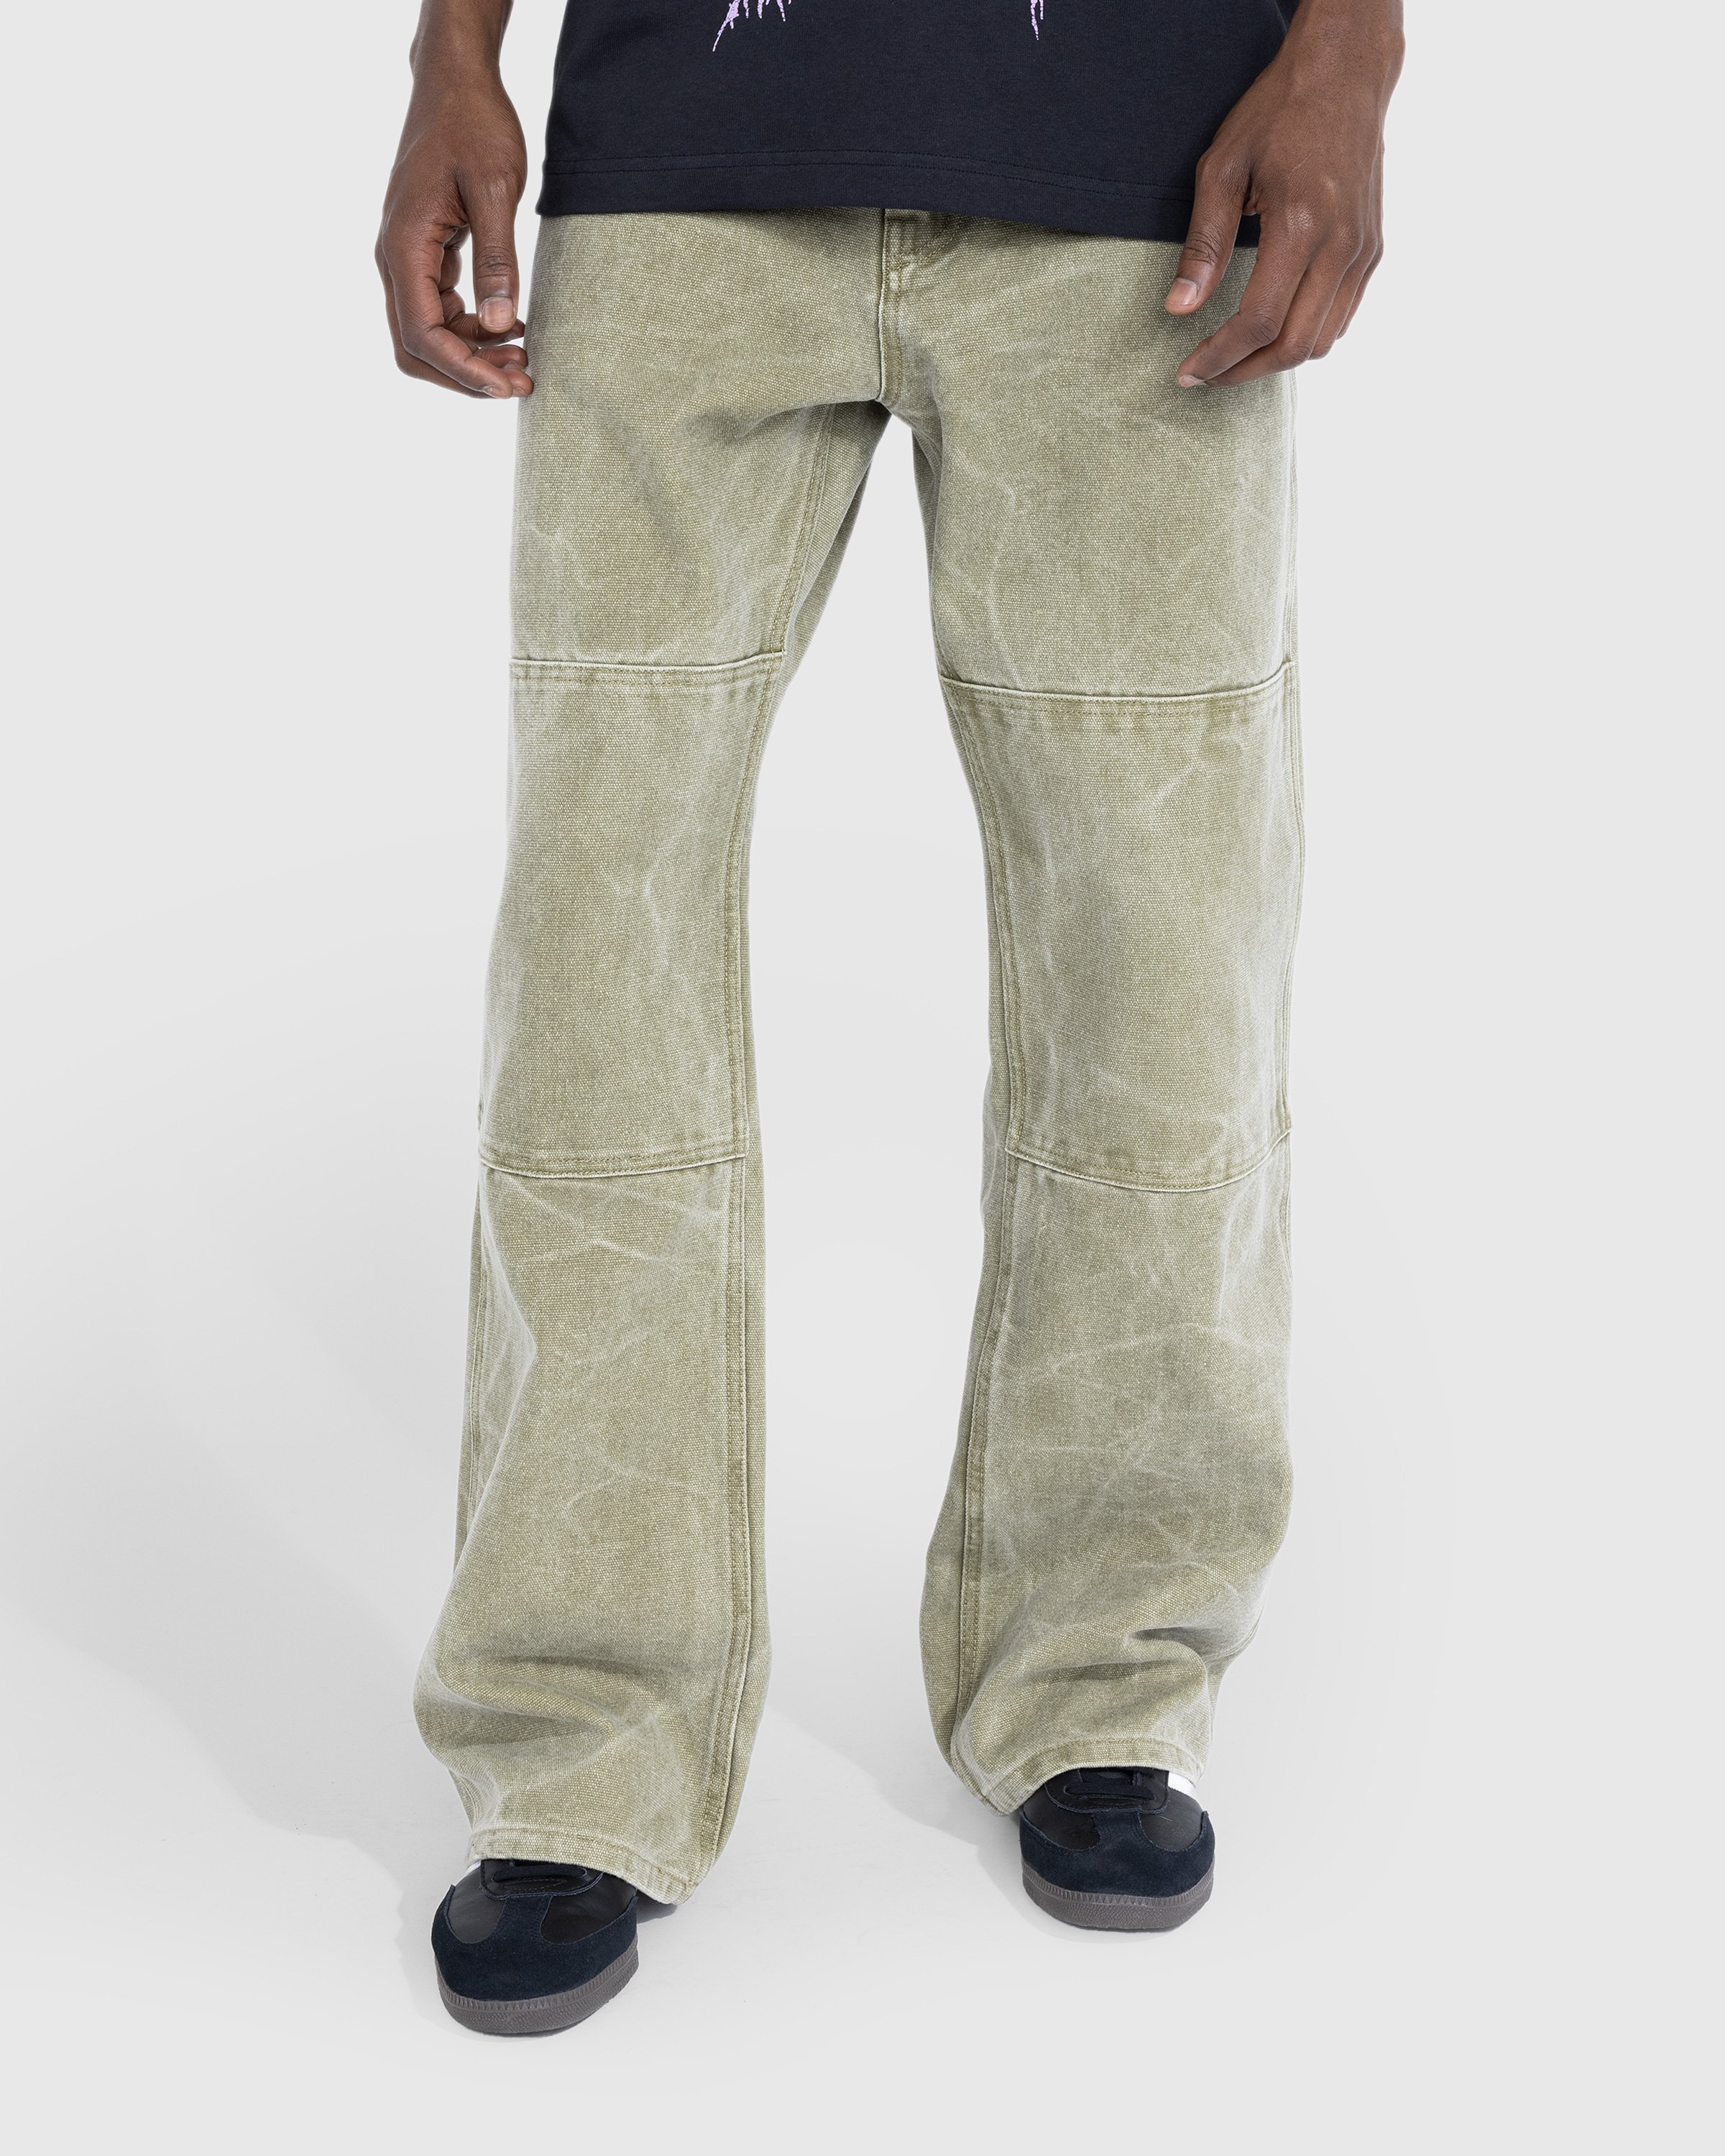 Acne Studios - Cotton Canvas Trousers Khaki Beige - Clothing - Green - Image 2